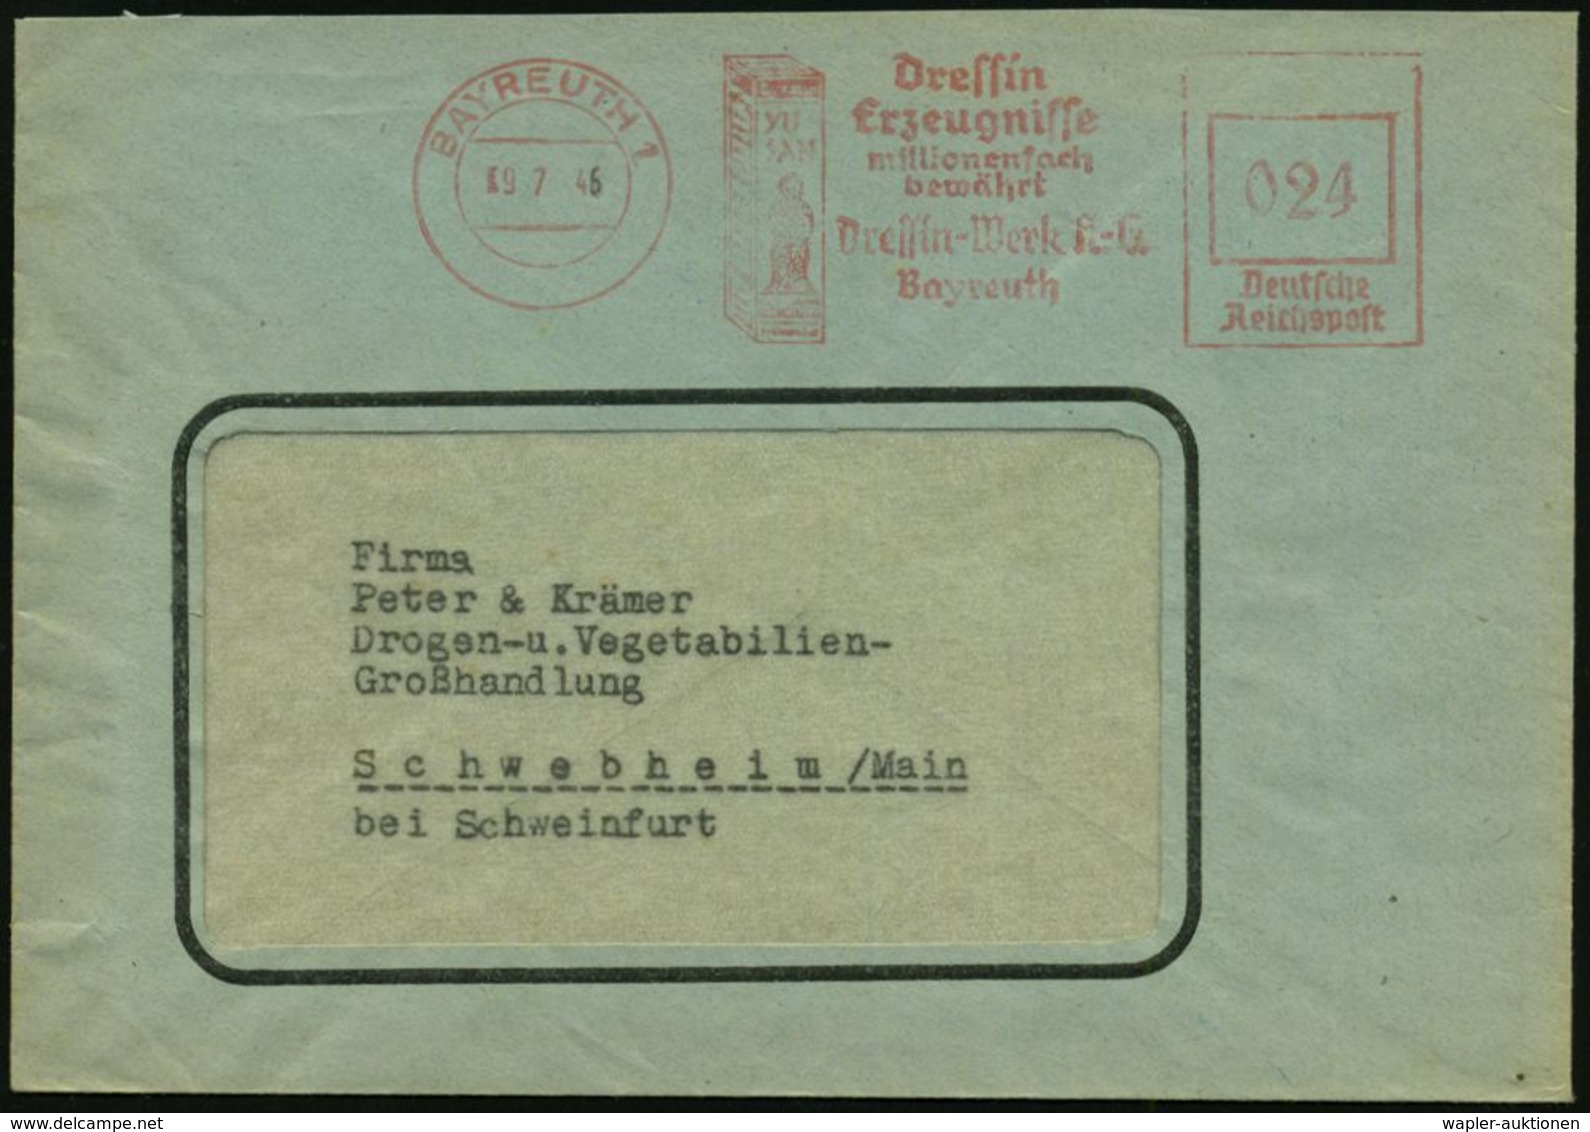 HAAR / BART / RASUR / FRISEUR : BAYREUTH 1/ YU SAN/ Dressin/ Erzeugnisse../ Dressin-Werke K.G. 1945 (9.7.) Aptierter AFS - Pharmacy